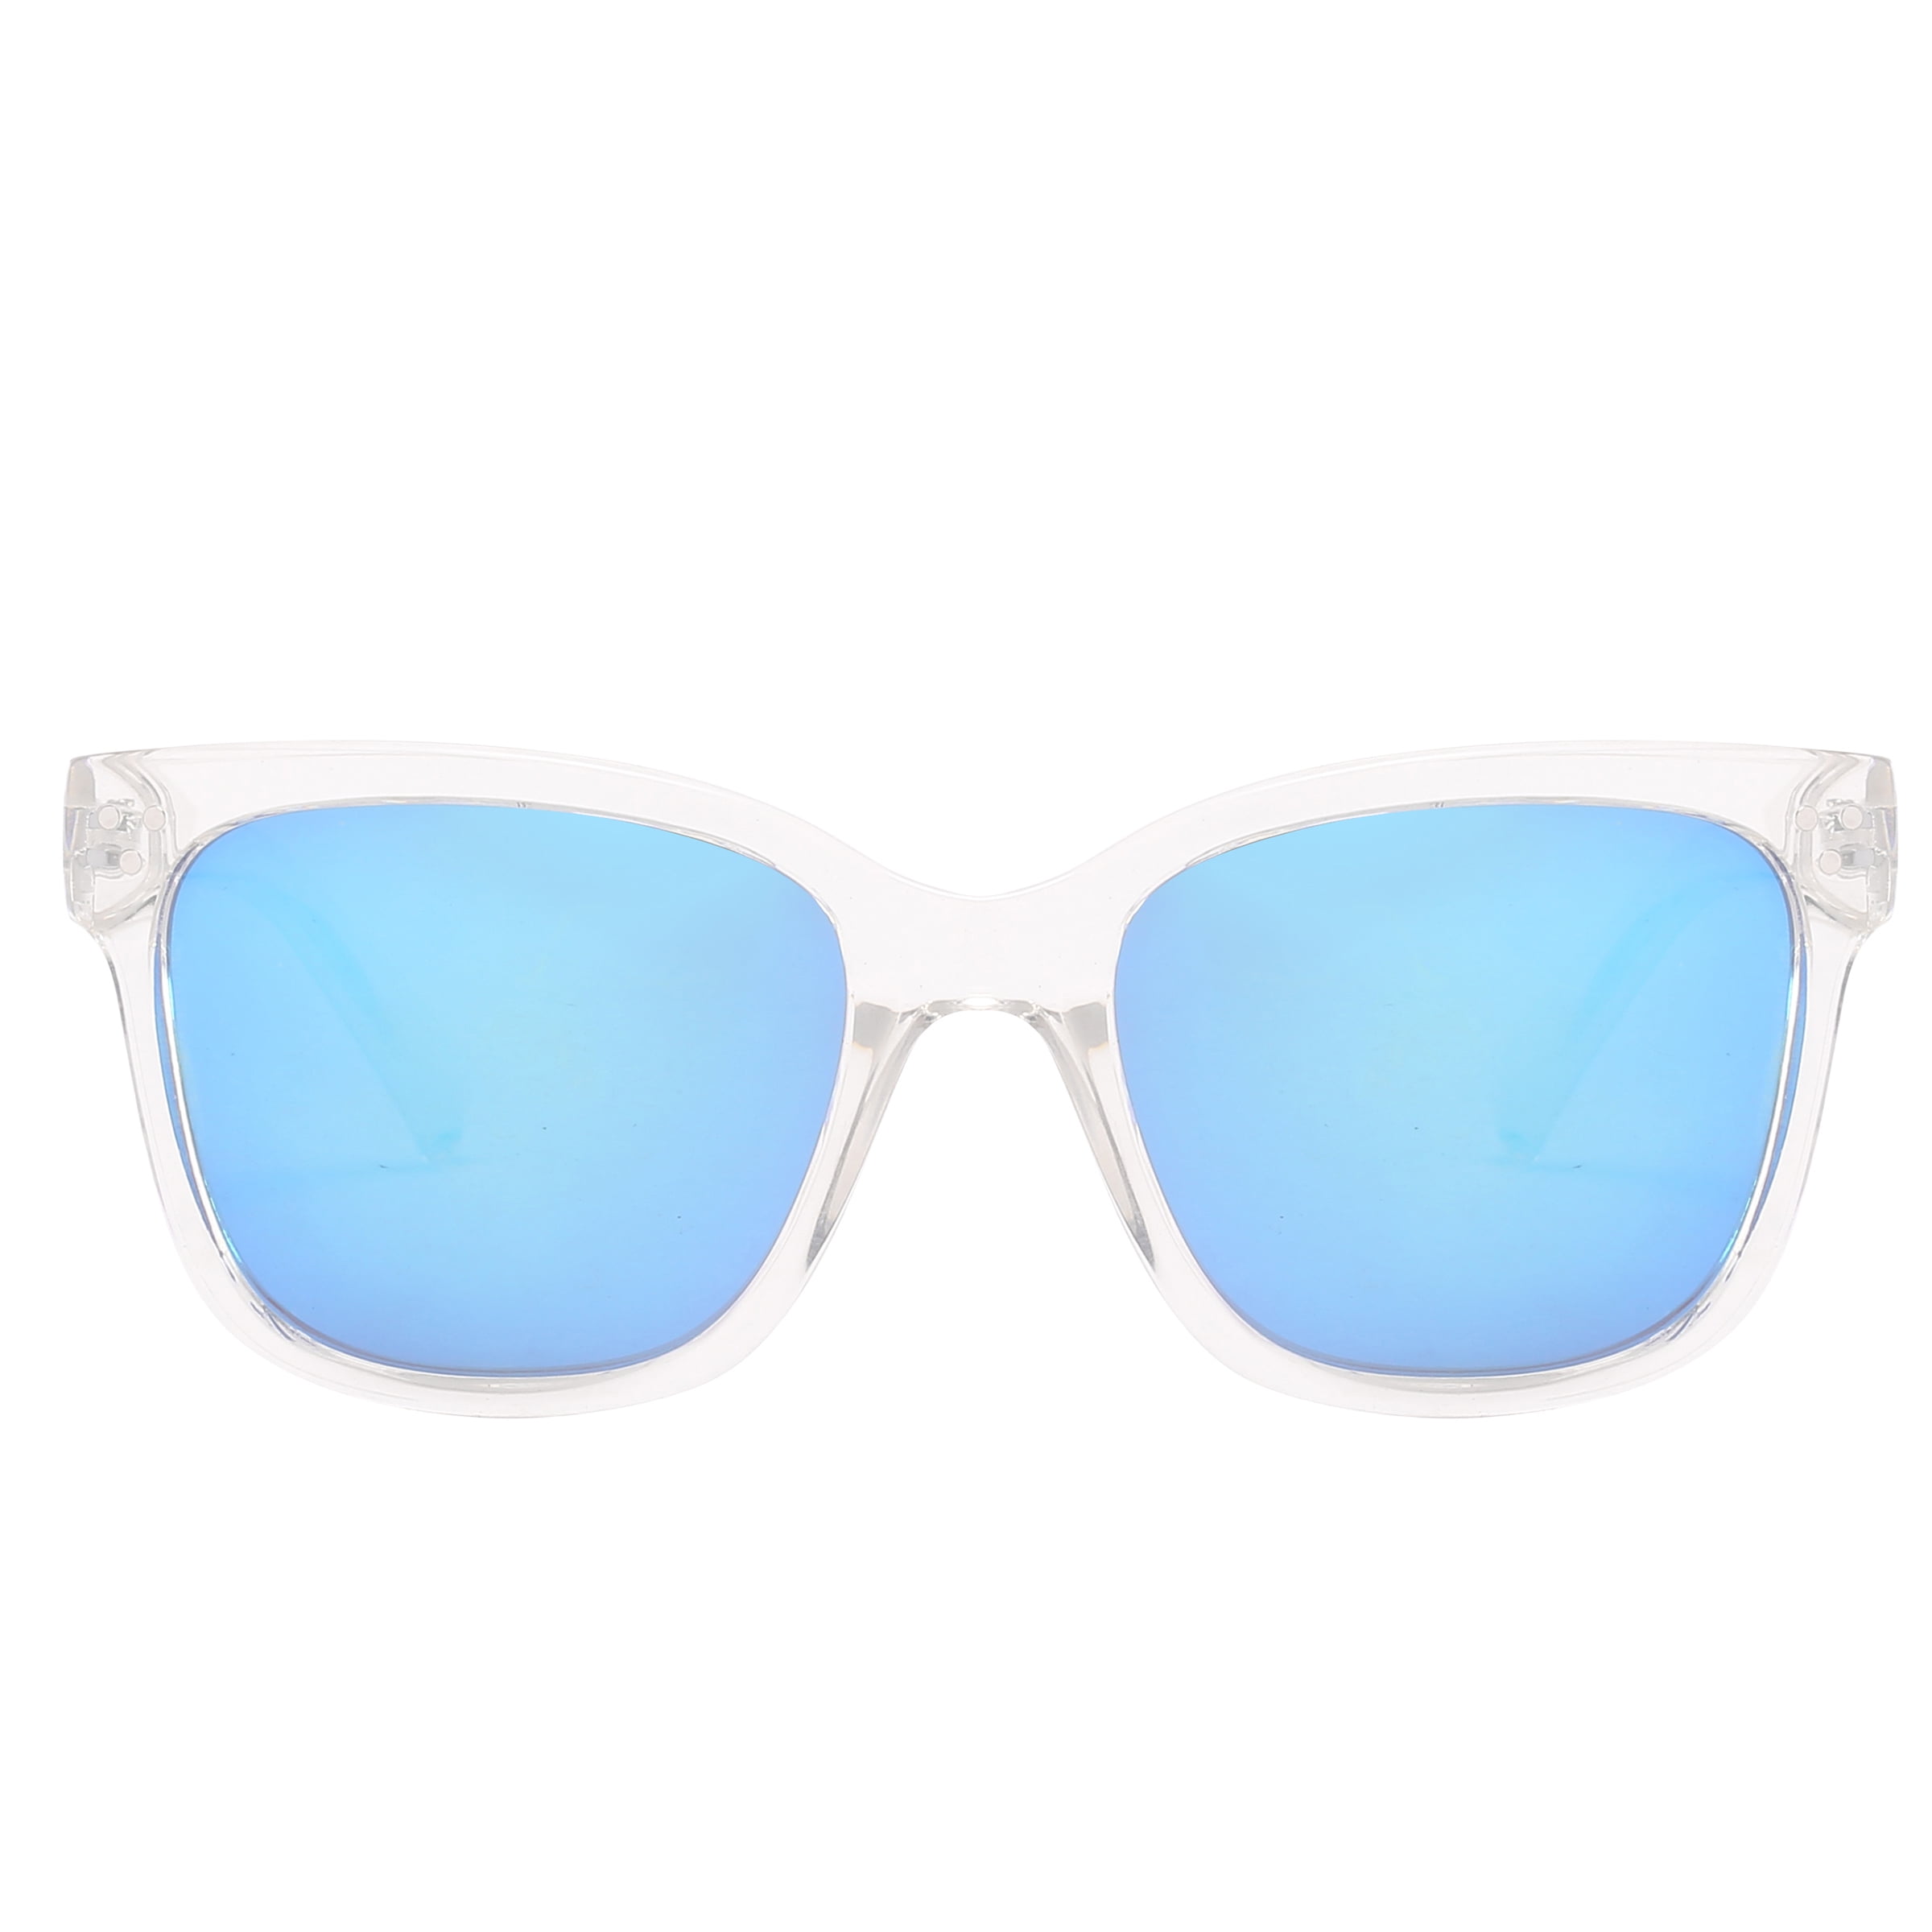 Piranha Eyewear Nova Eco-Pact Clear Unisex Sunglasses with Blue Mirror Lens  